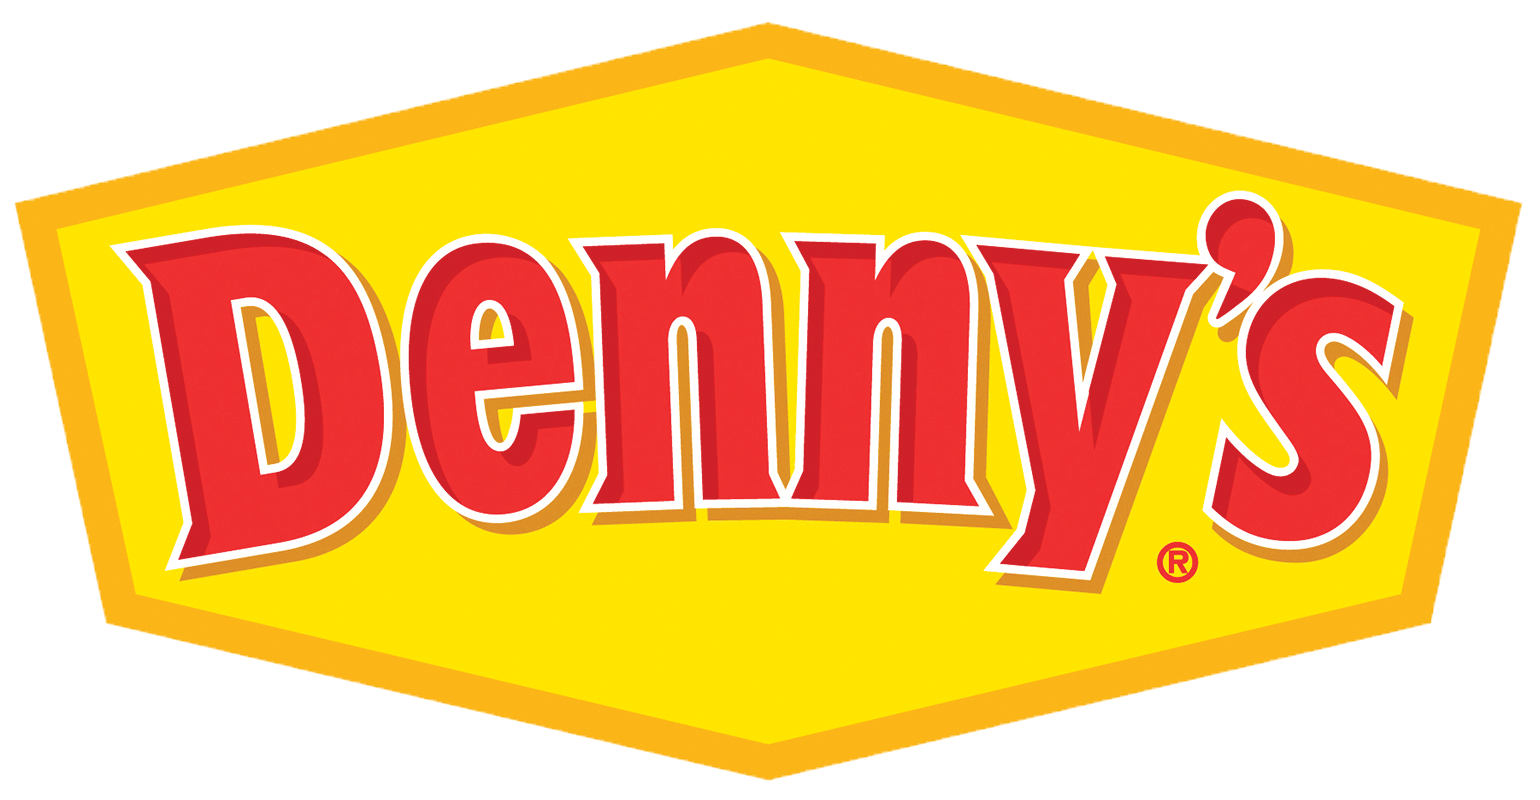 dennys logo 1